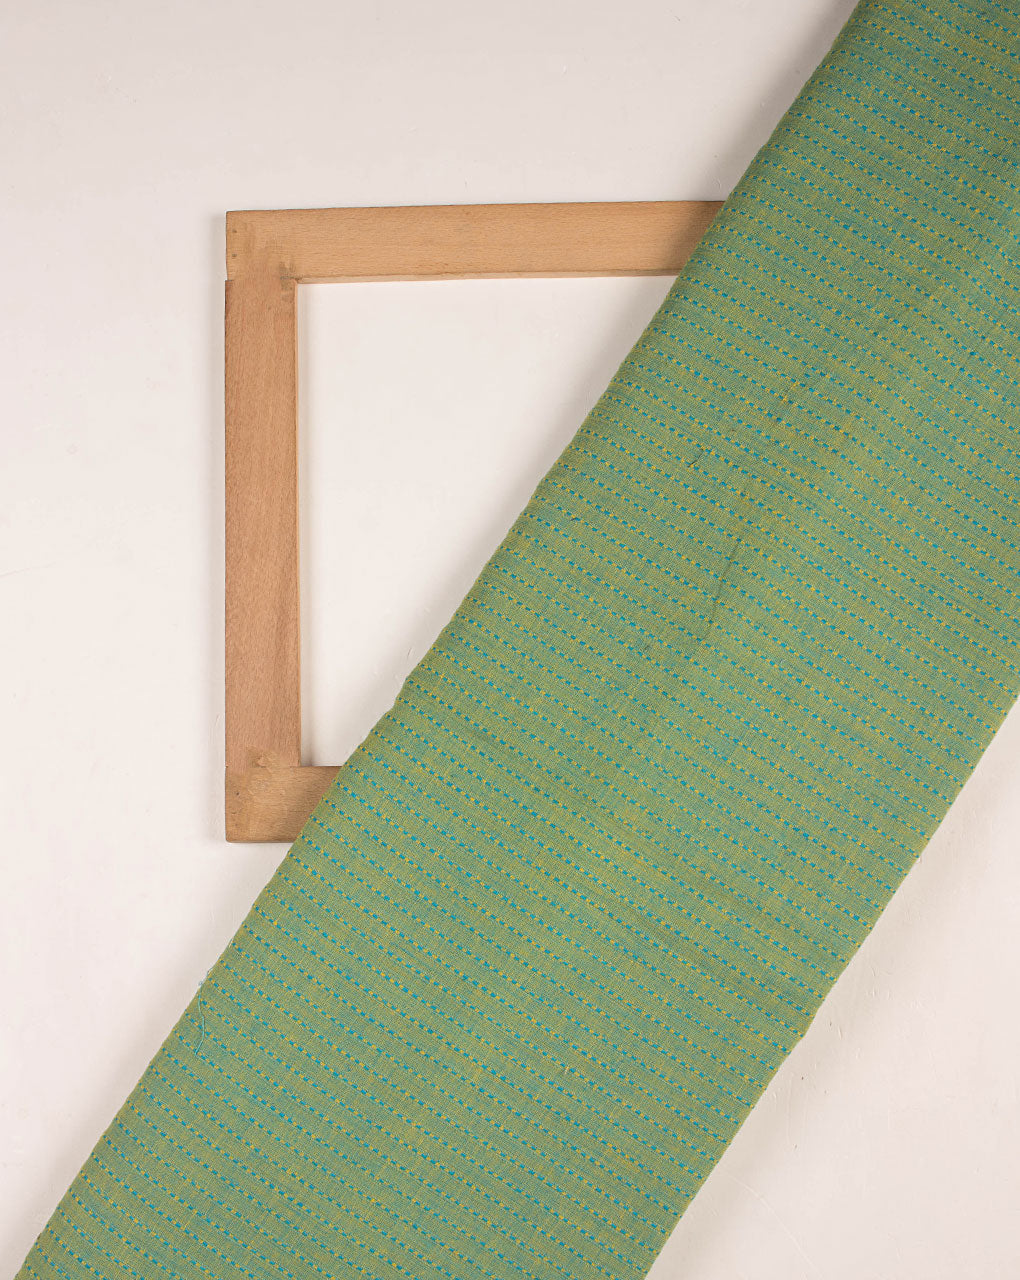 Woven Loom TextuKantha Cotton Fabric - Fabriclore.com